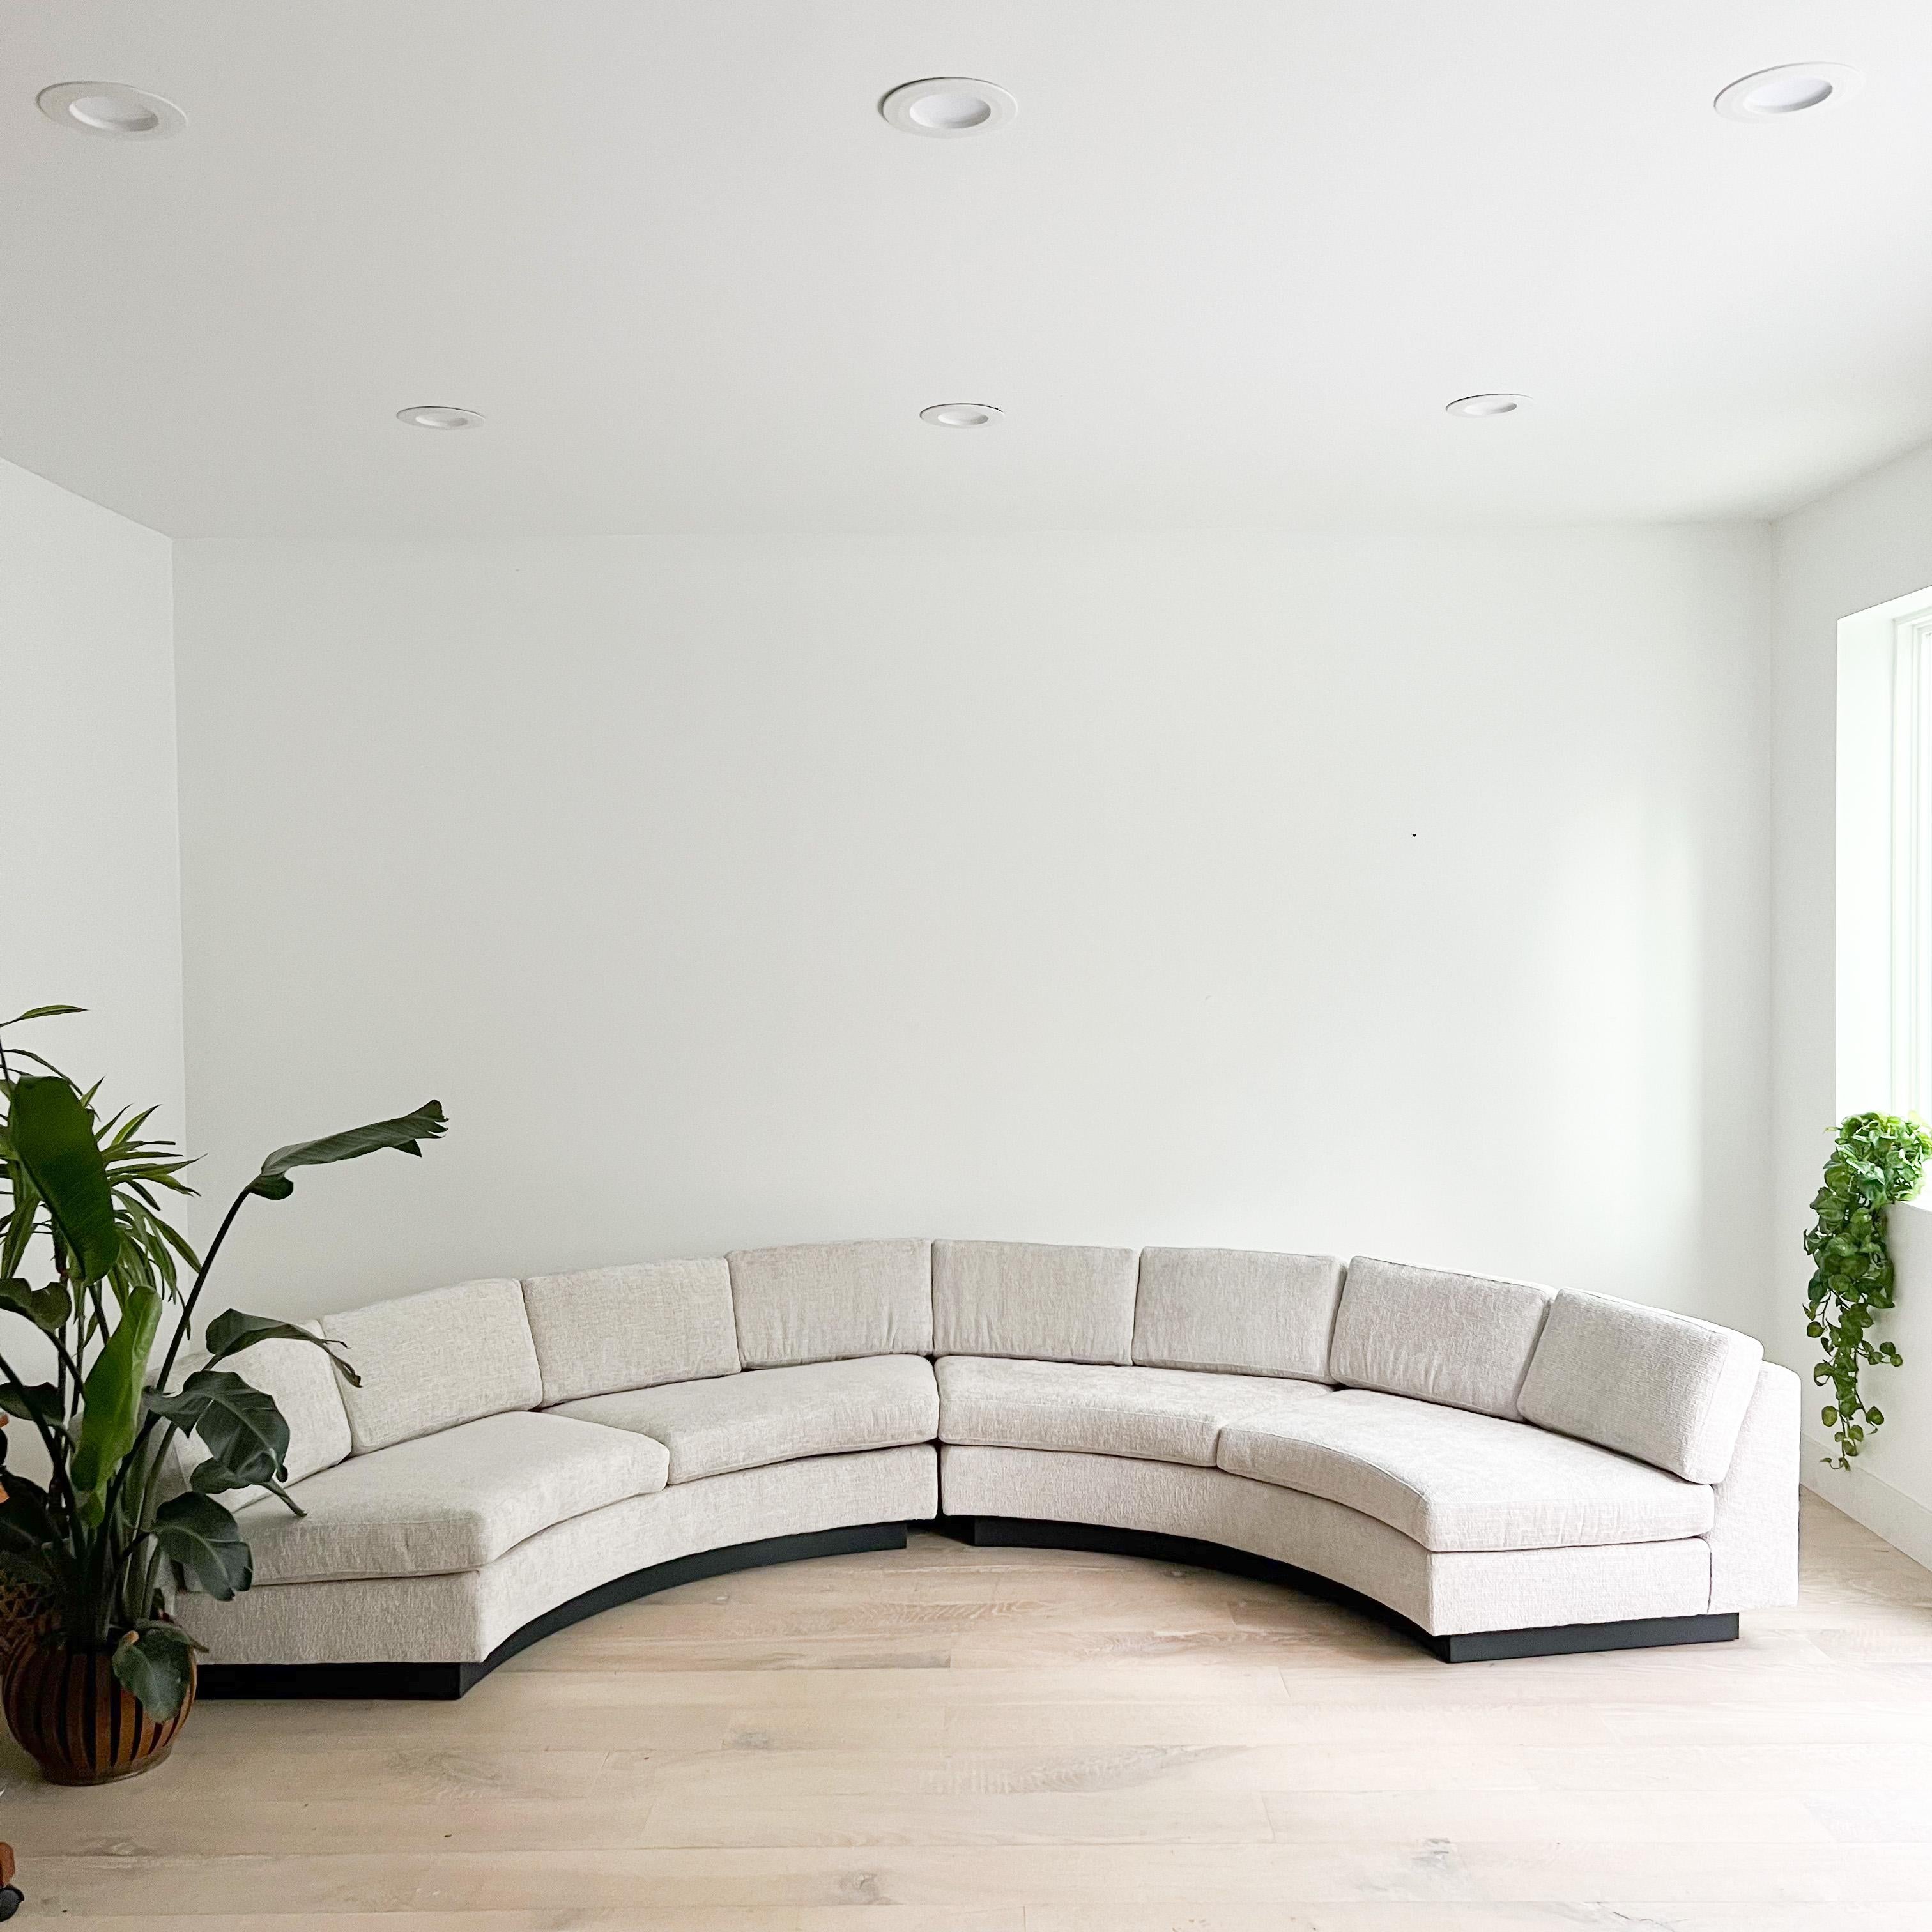 Mid Century Modern Semi-Circle Round Sectional Sofa - New Basketweave Upholstery 5